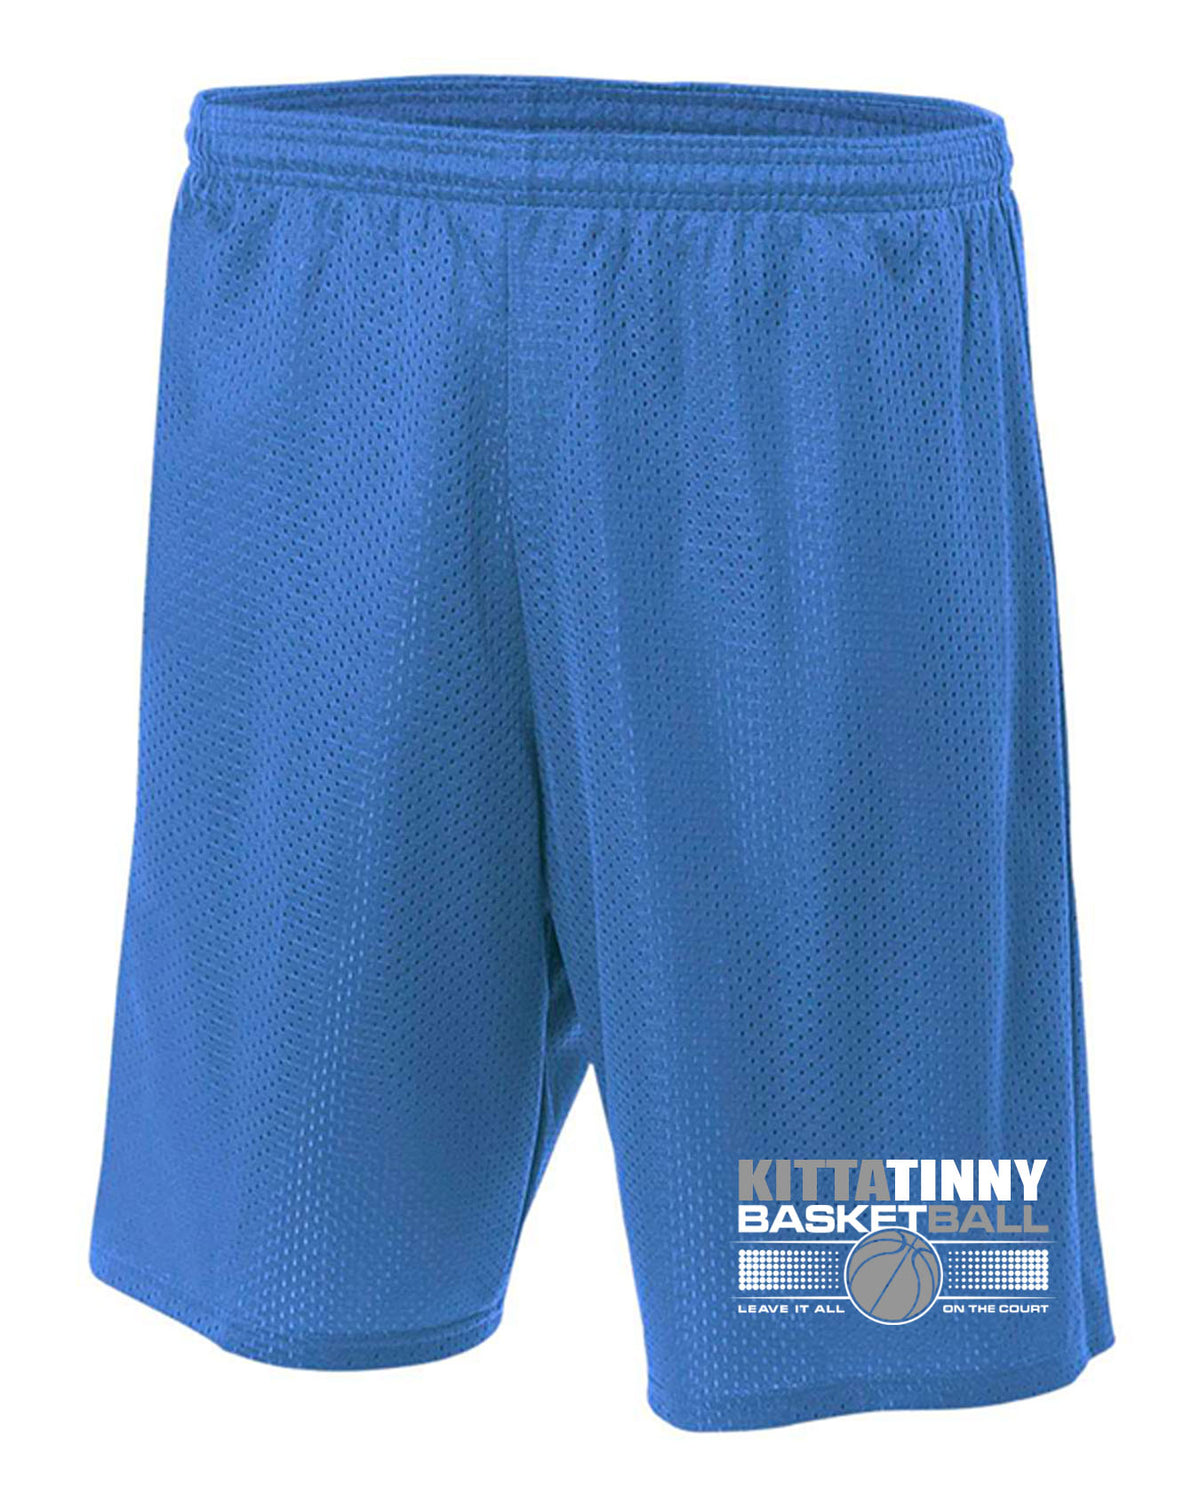 Kittatinny Basketball Design 1 Mesh Shorts